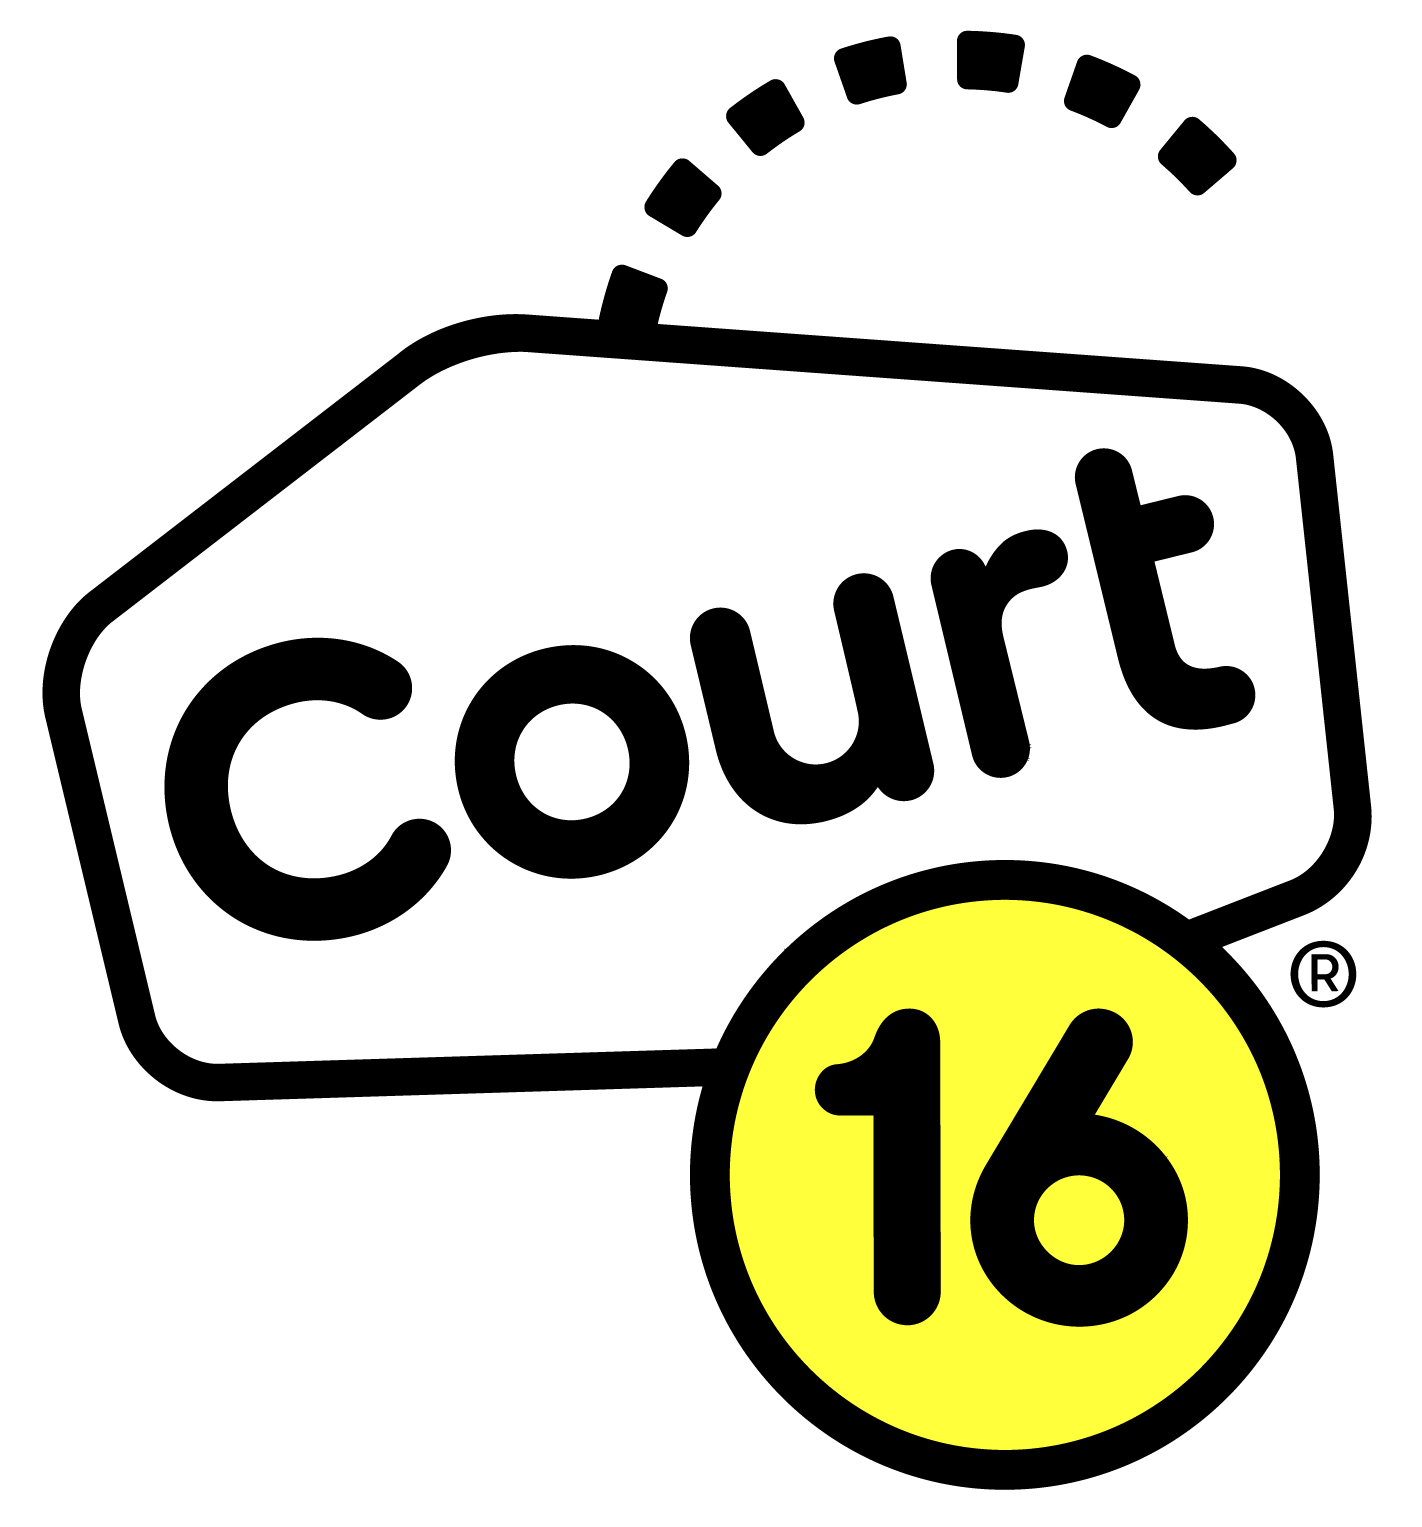 Court 16